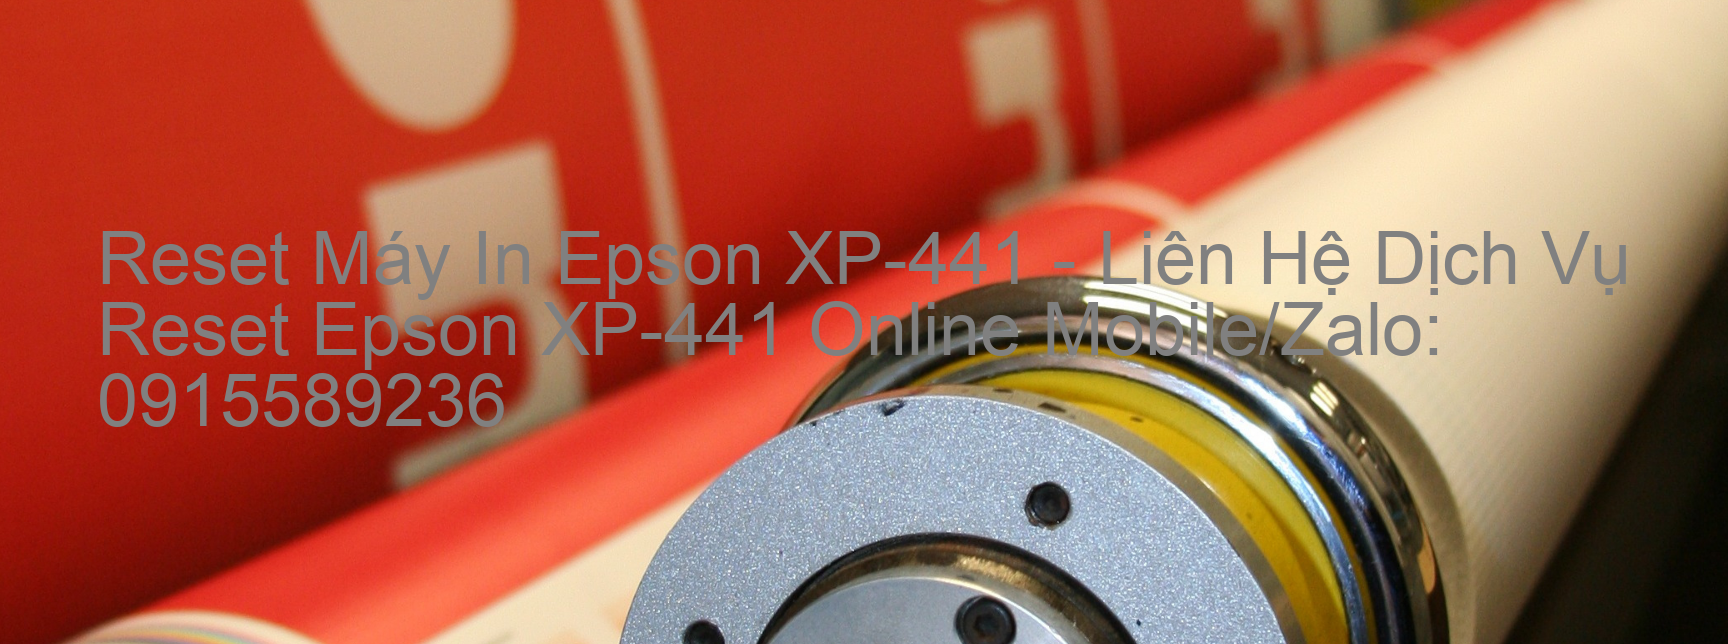 Reset Máy In Epson XP-441 Online